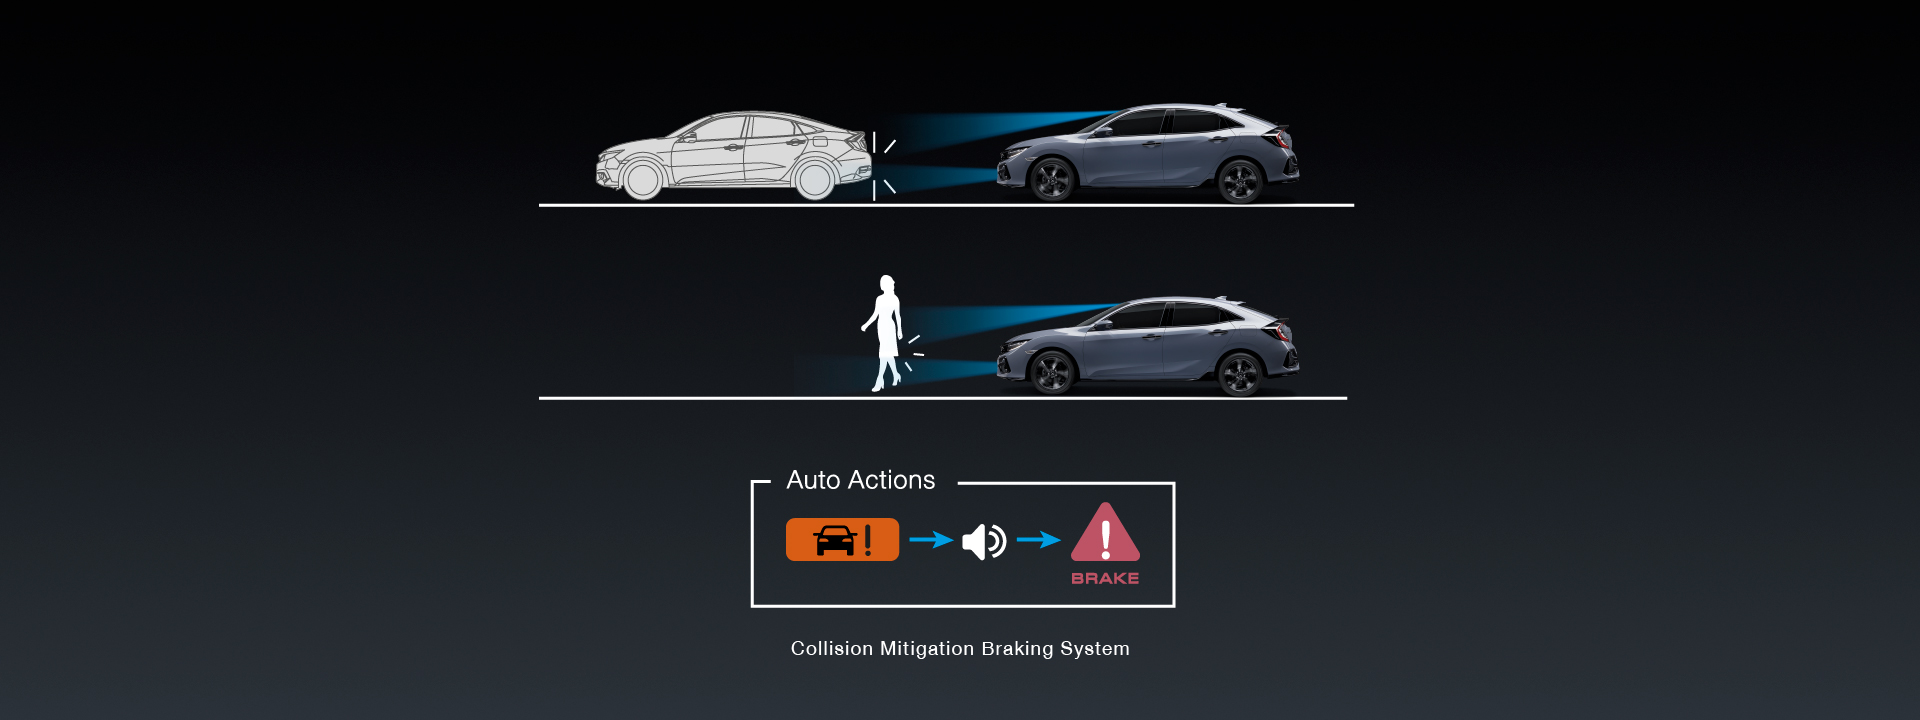 Collision Mitigation Braking System (CMBS) ระบบเตือนการชนรถและคนเดินถนนพร้อมระบบช่วยเบรค